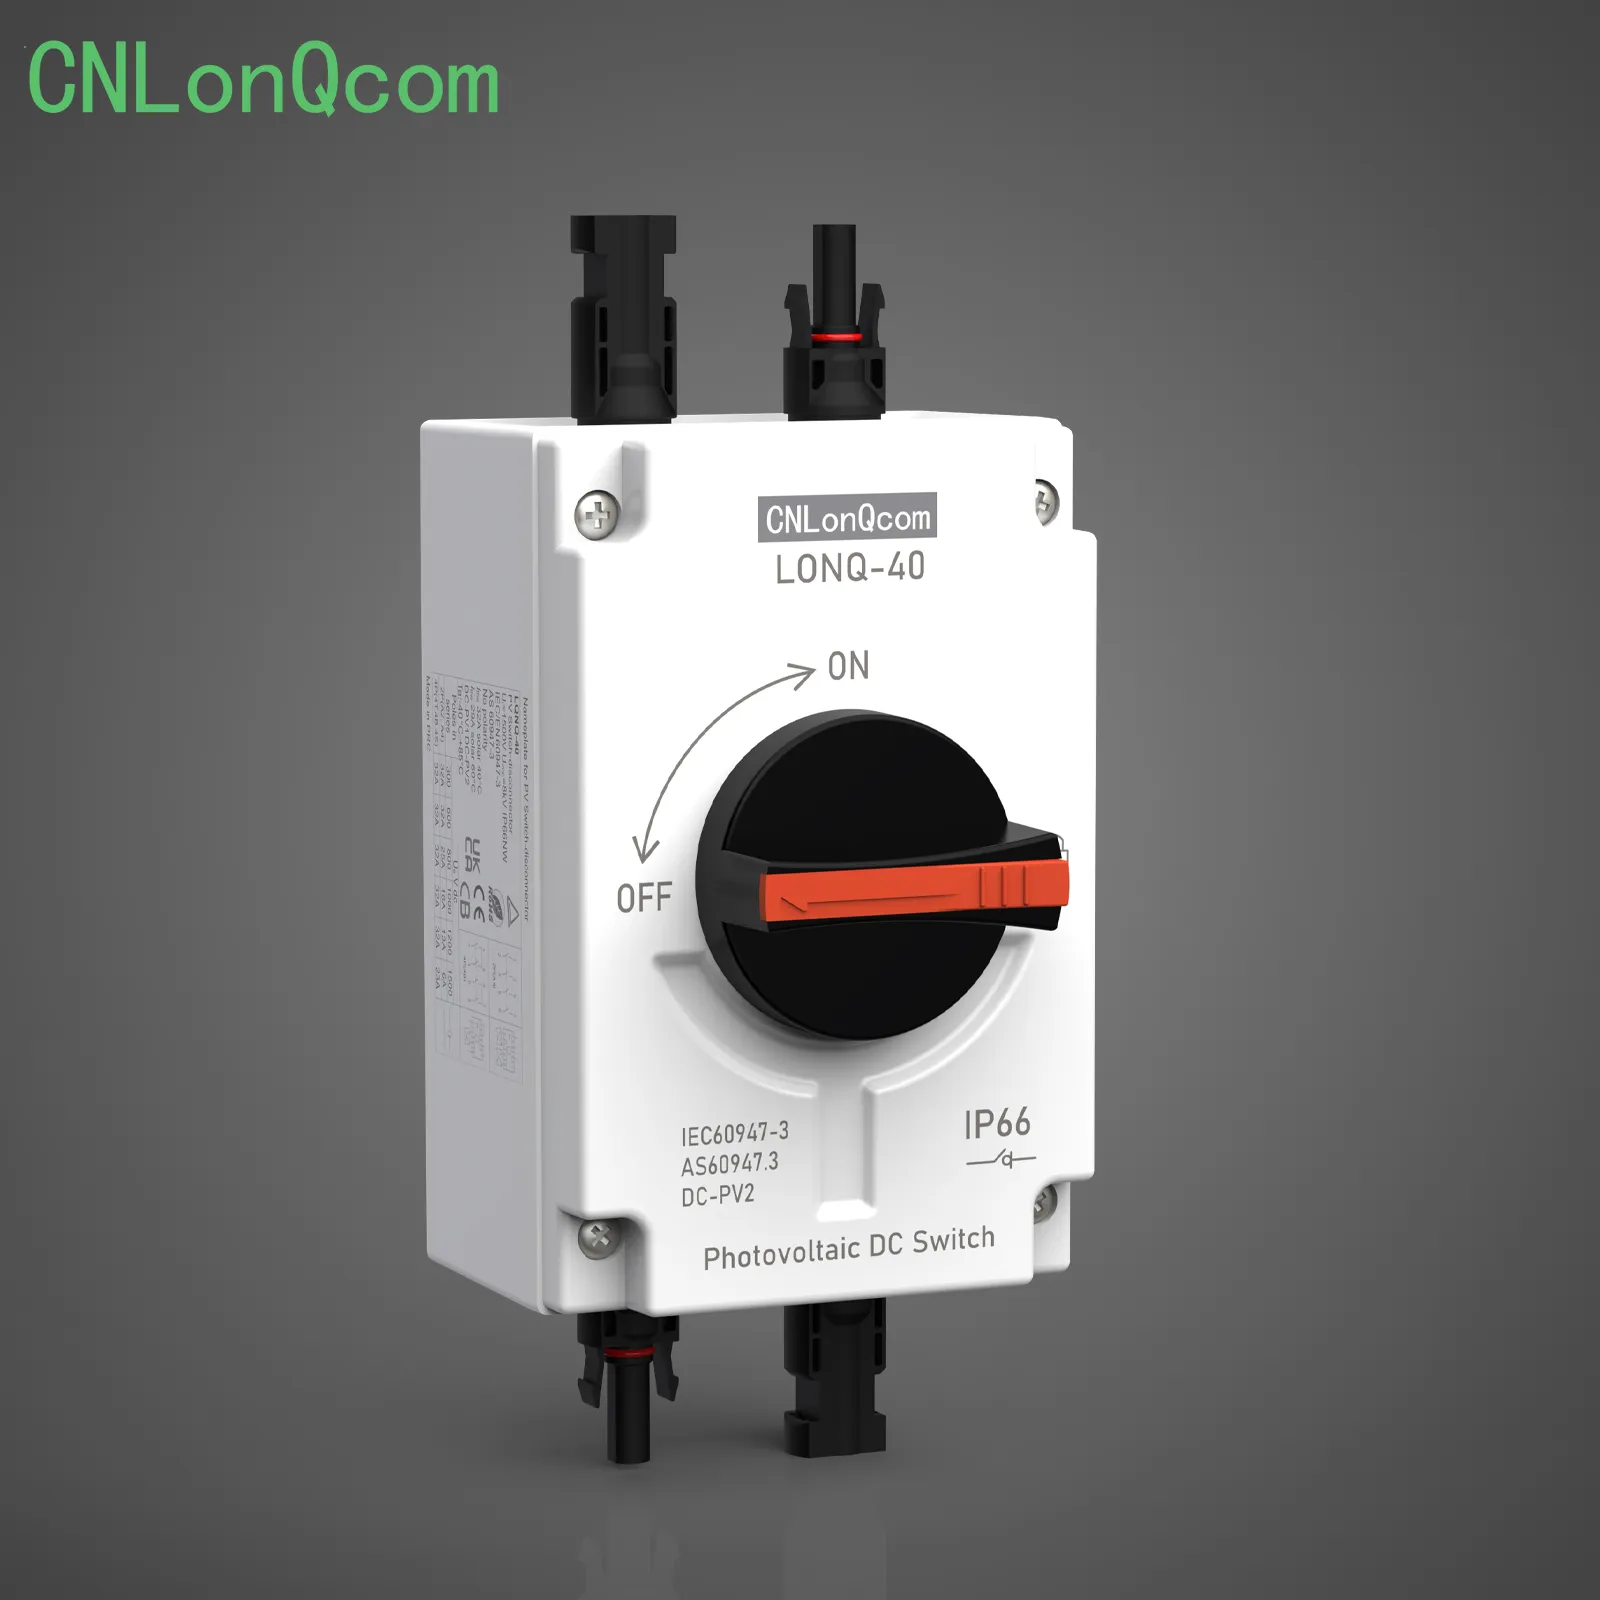 CNLonQcom Showcases Isolator Switch in New Video